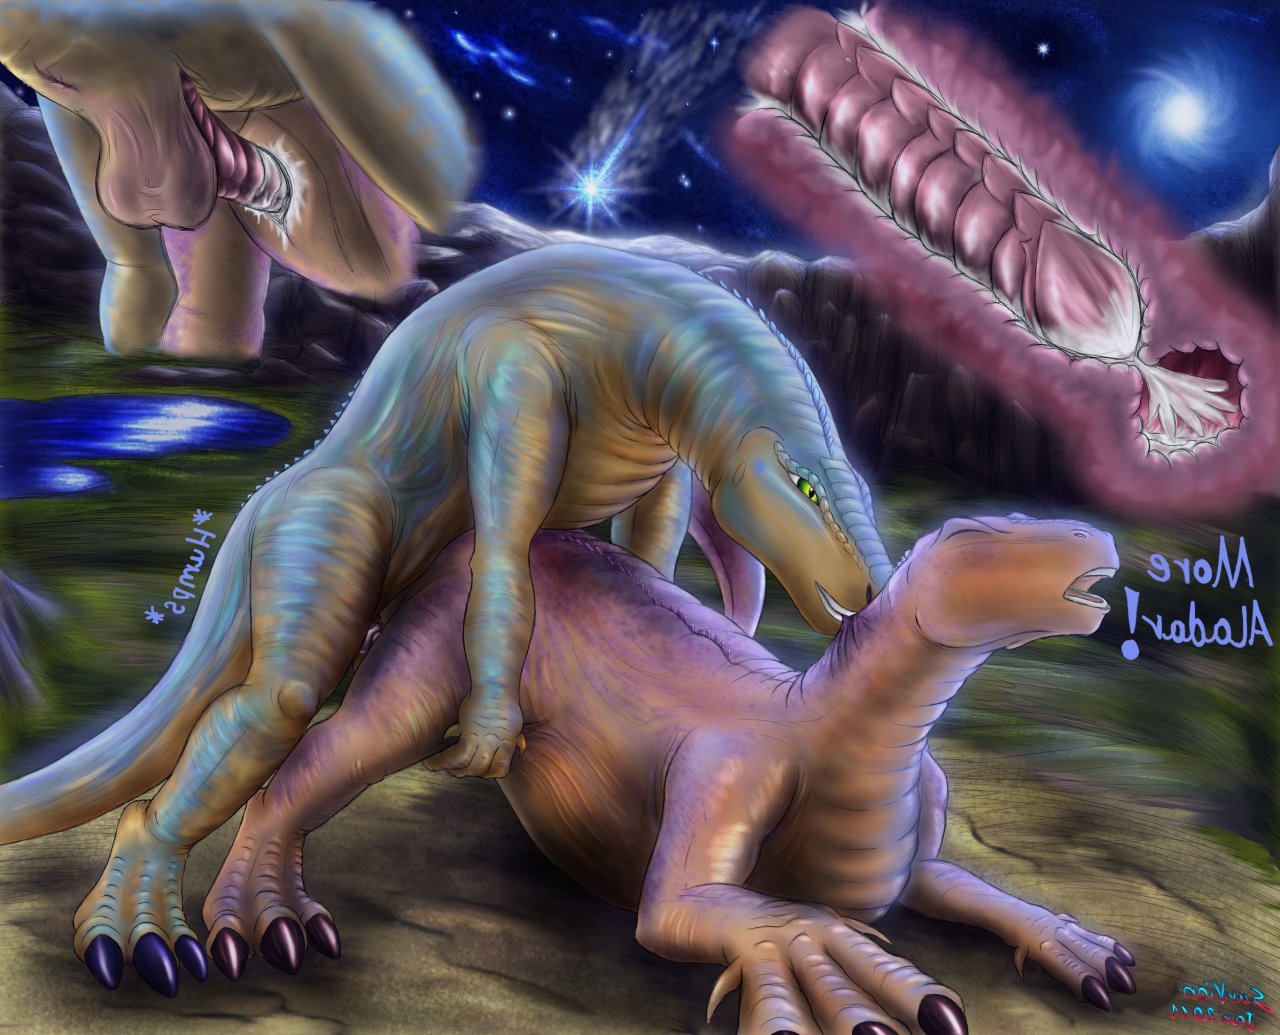 Dinosaur porn